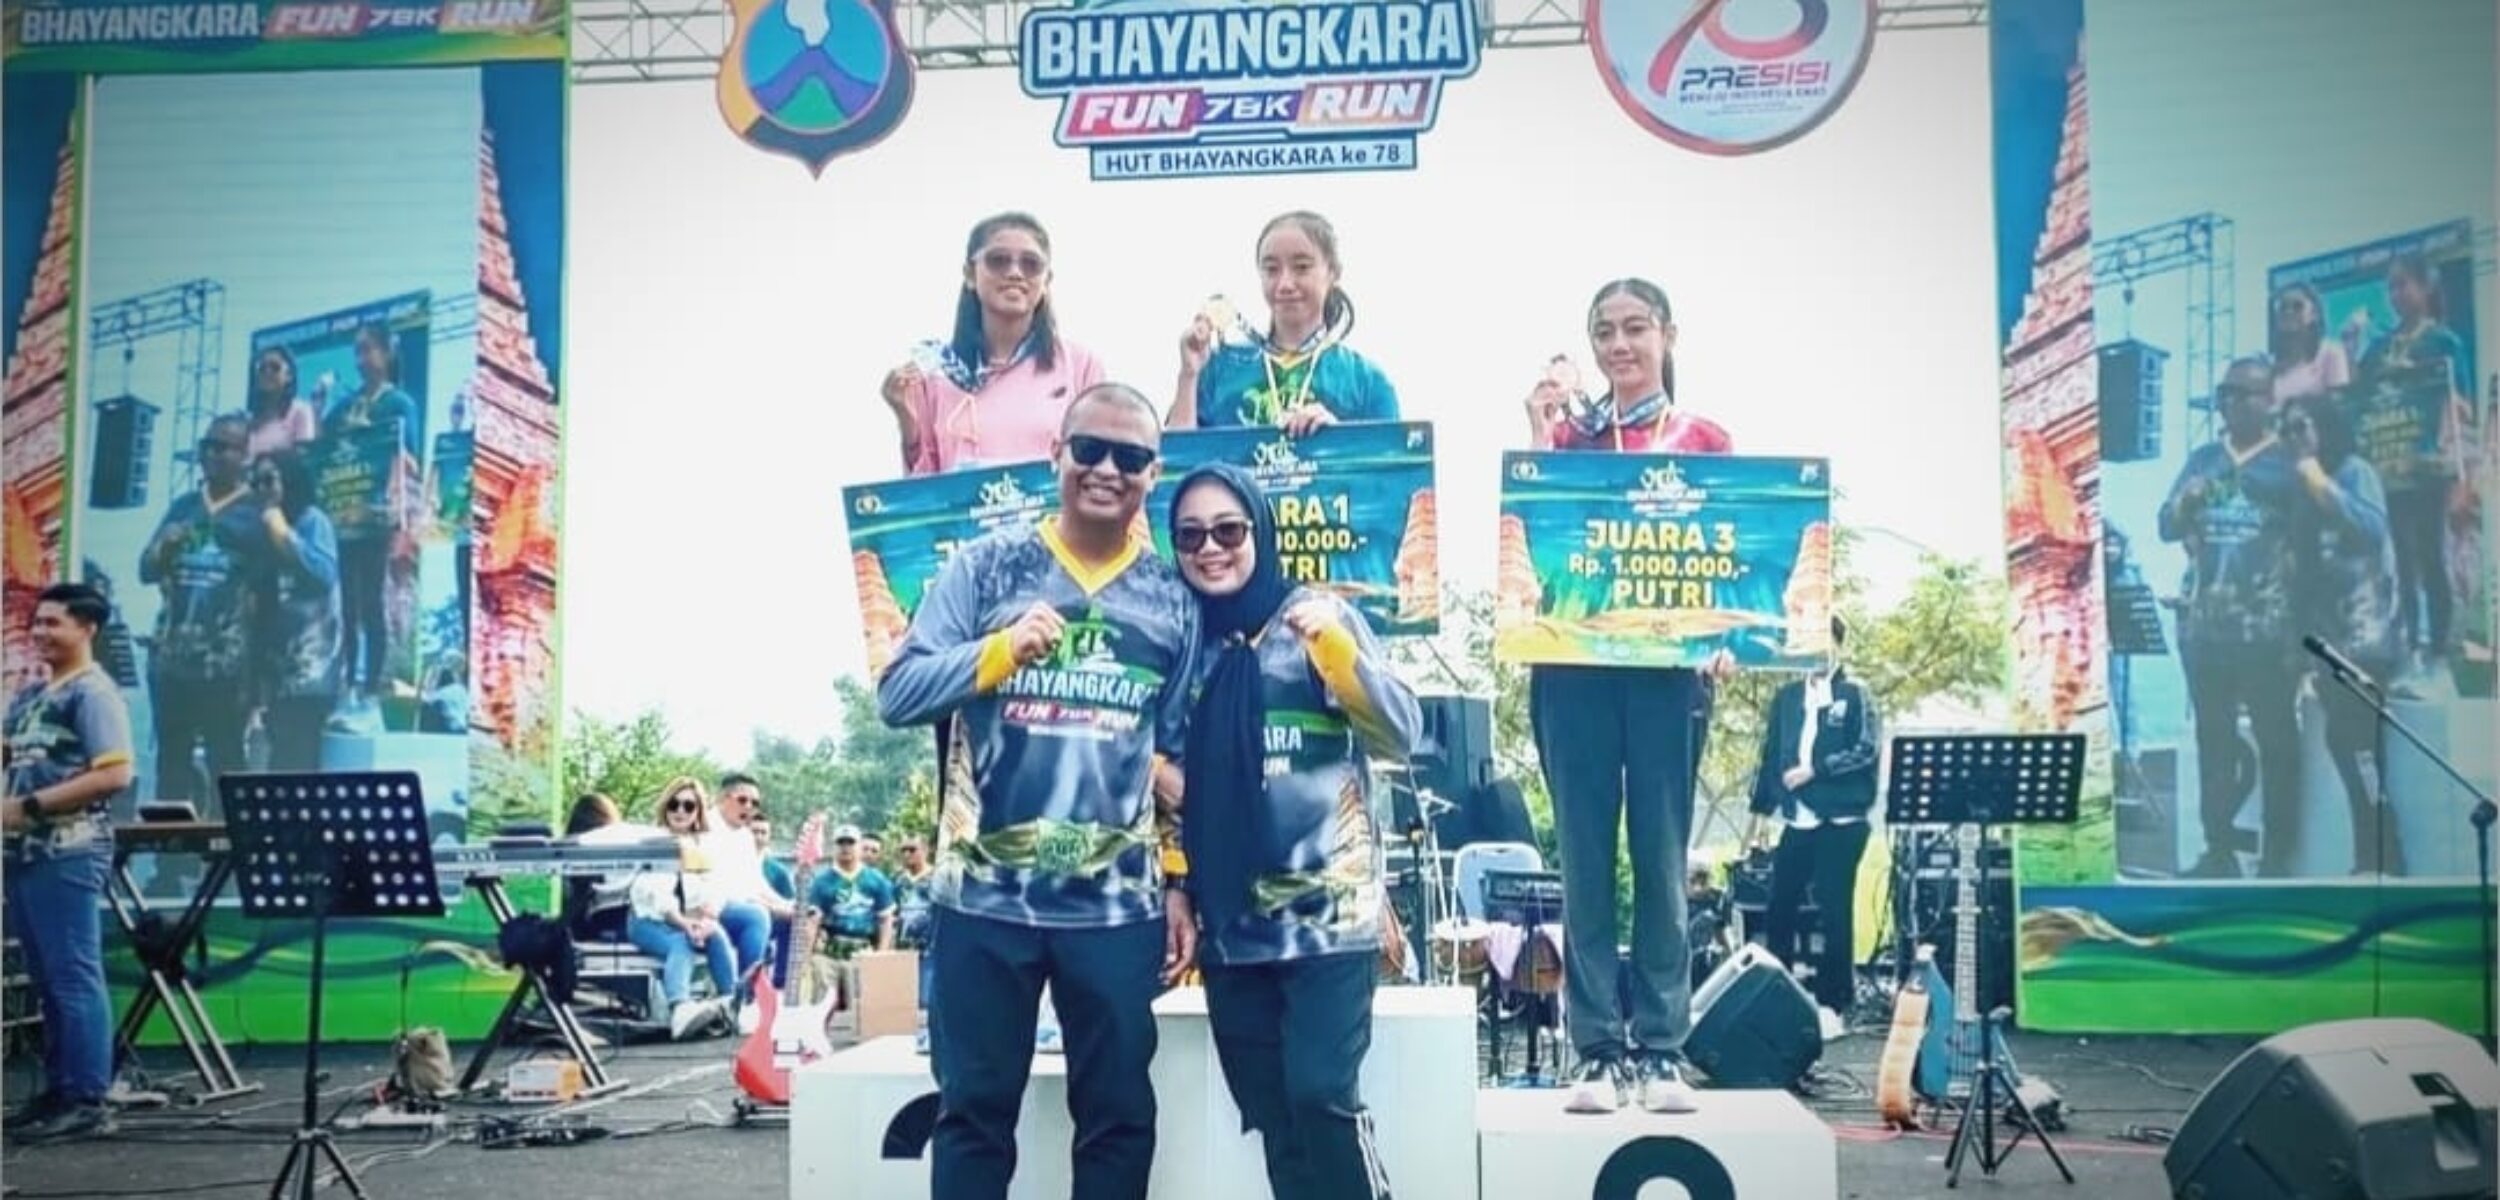 Kapolres Mojokerto AKBP Ihram Kustarto beserta Istri setelah menyerahkan hadiah keoada peserta Fun Run Hari Bhayangkara 78